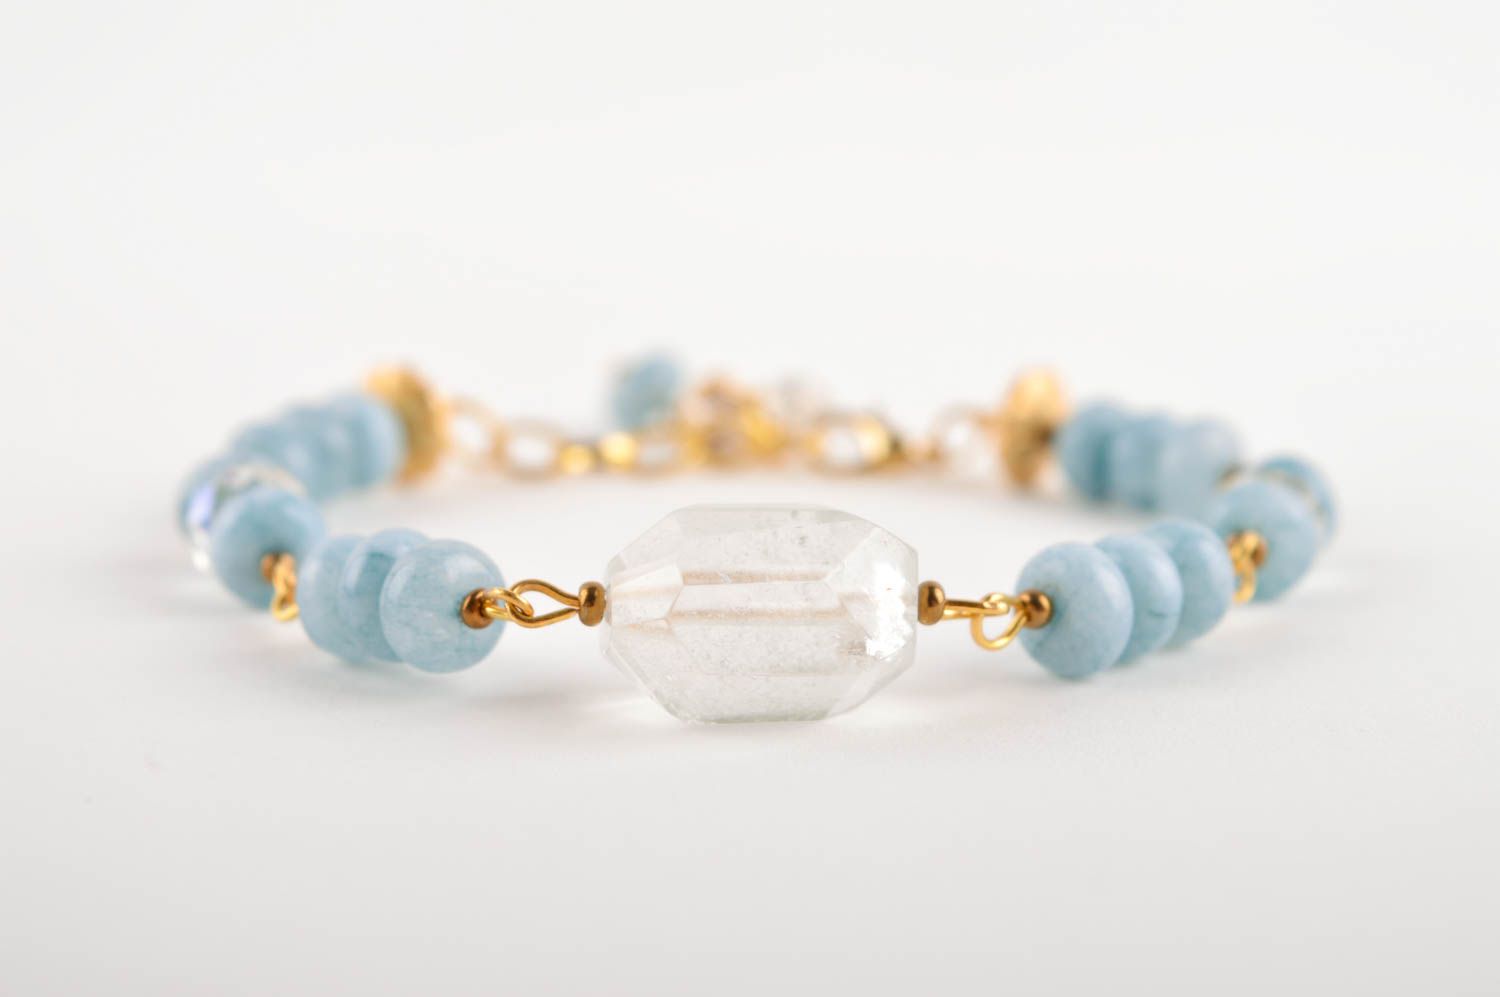 Handmade designer bracelet wrist bracelet fashion jewelry with natural stones photo 3